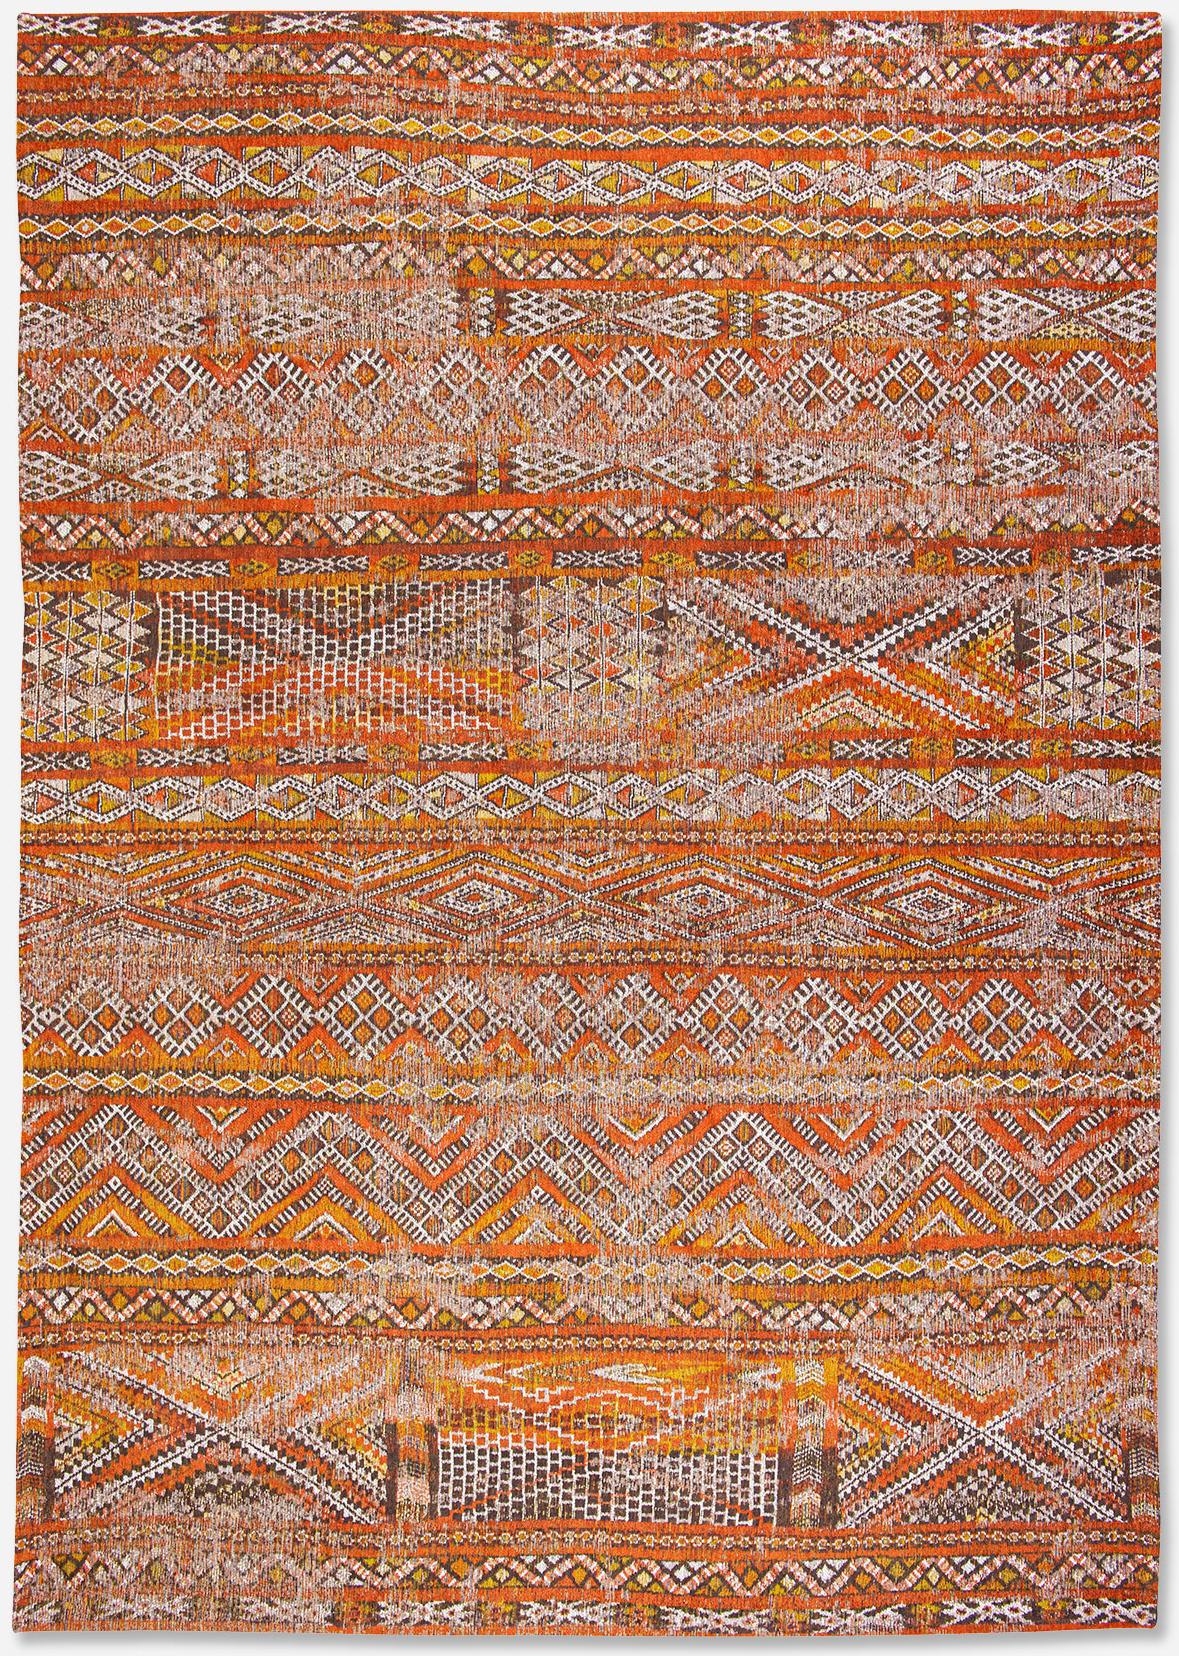 Antiquarian Flatwoven Orange Rug ☞ Size: 5' 7" x 8' (170 x 240 cm)